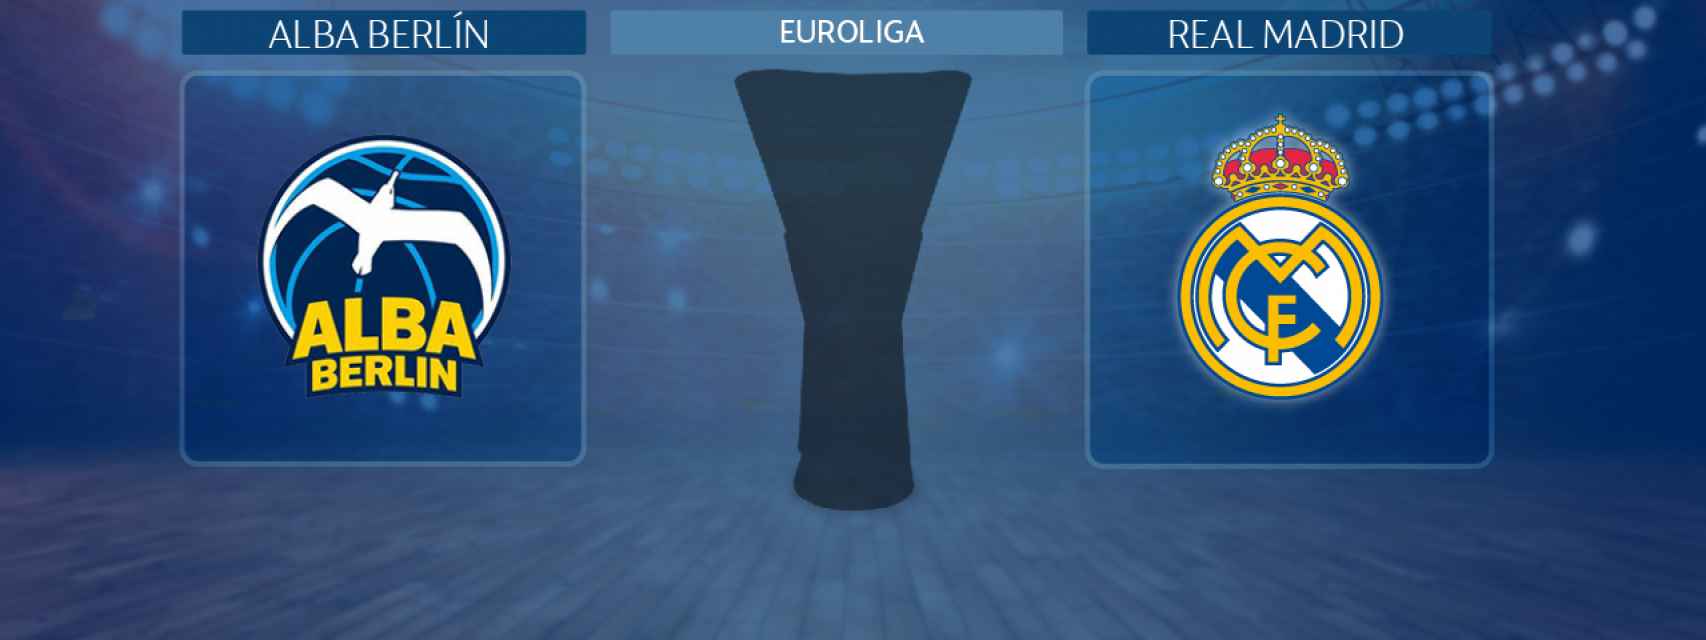 Alba Berlín - Real Madrid, partido de la Euroliga